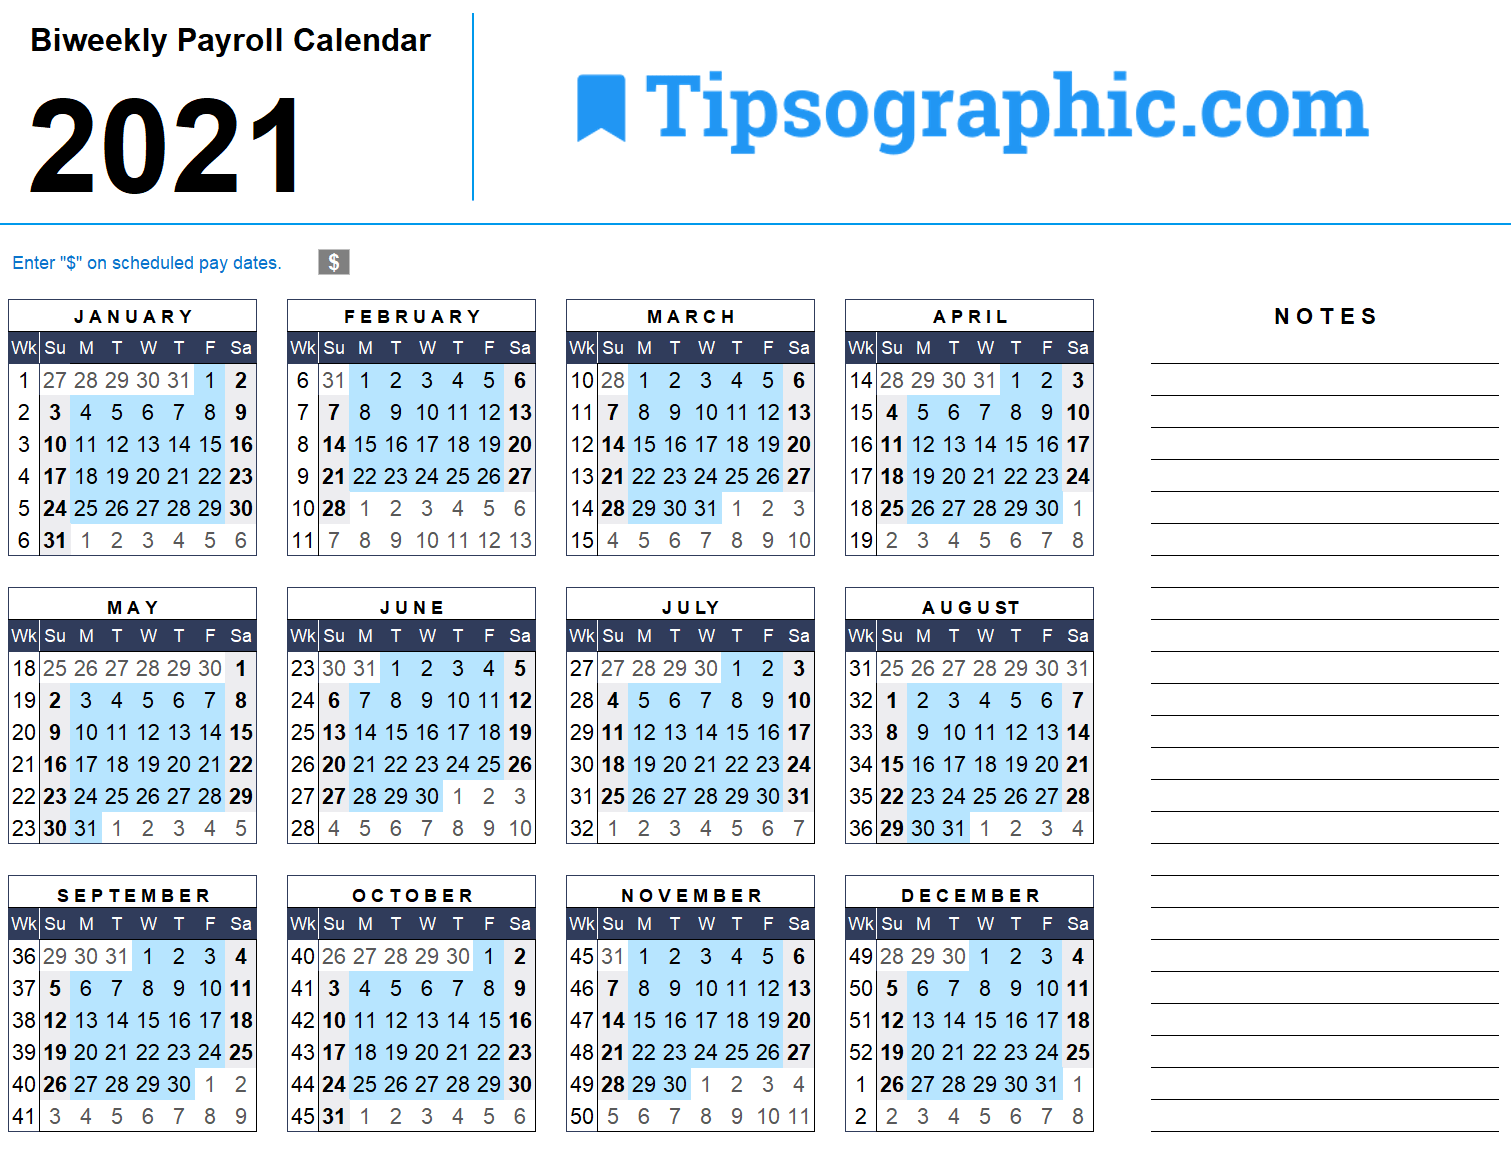 Paycheck Calendar 2022 Free Download > Download The 2021 Biweekly Payroll Calendar